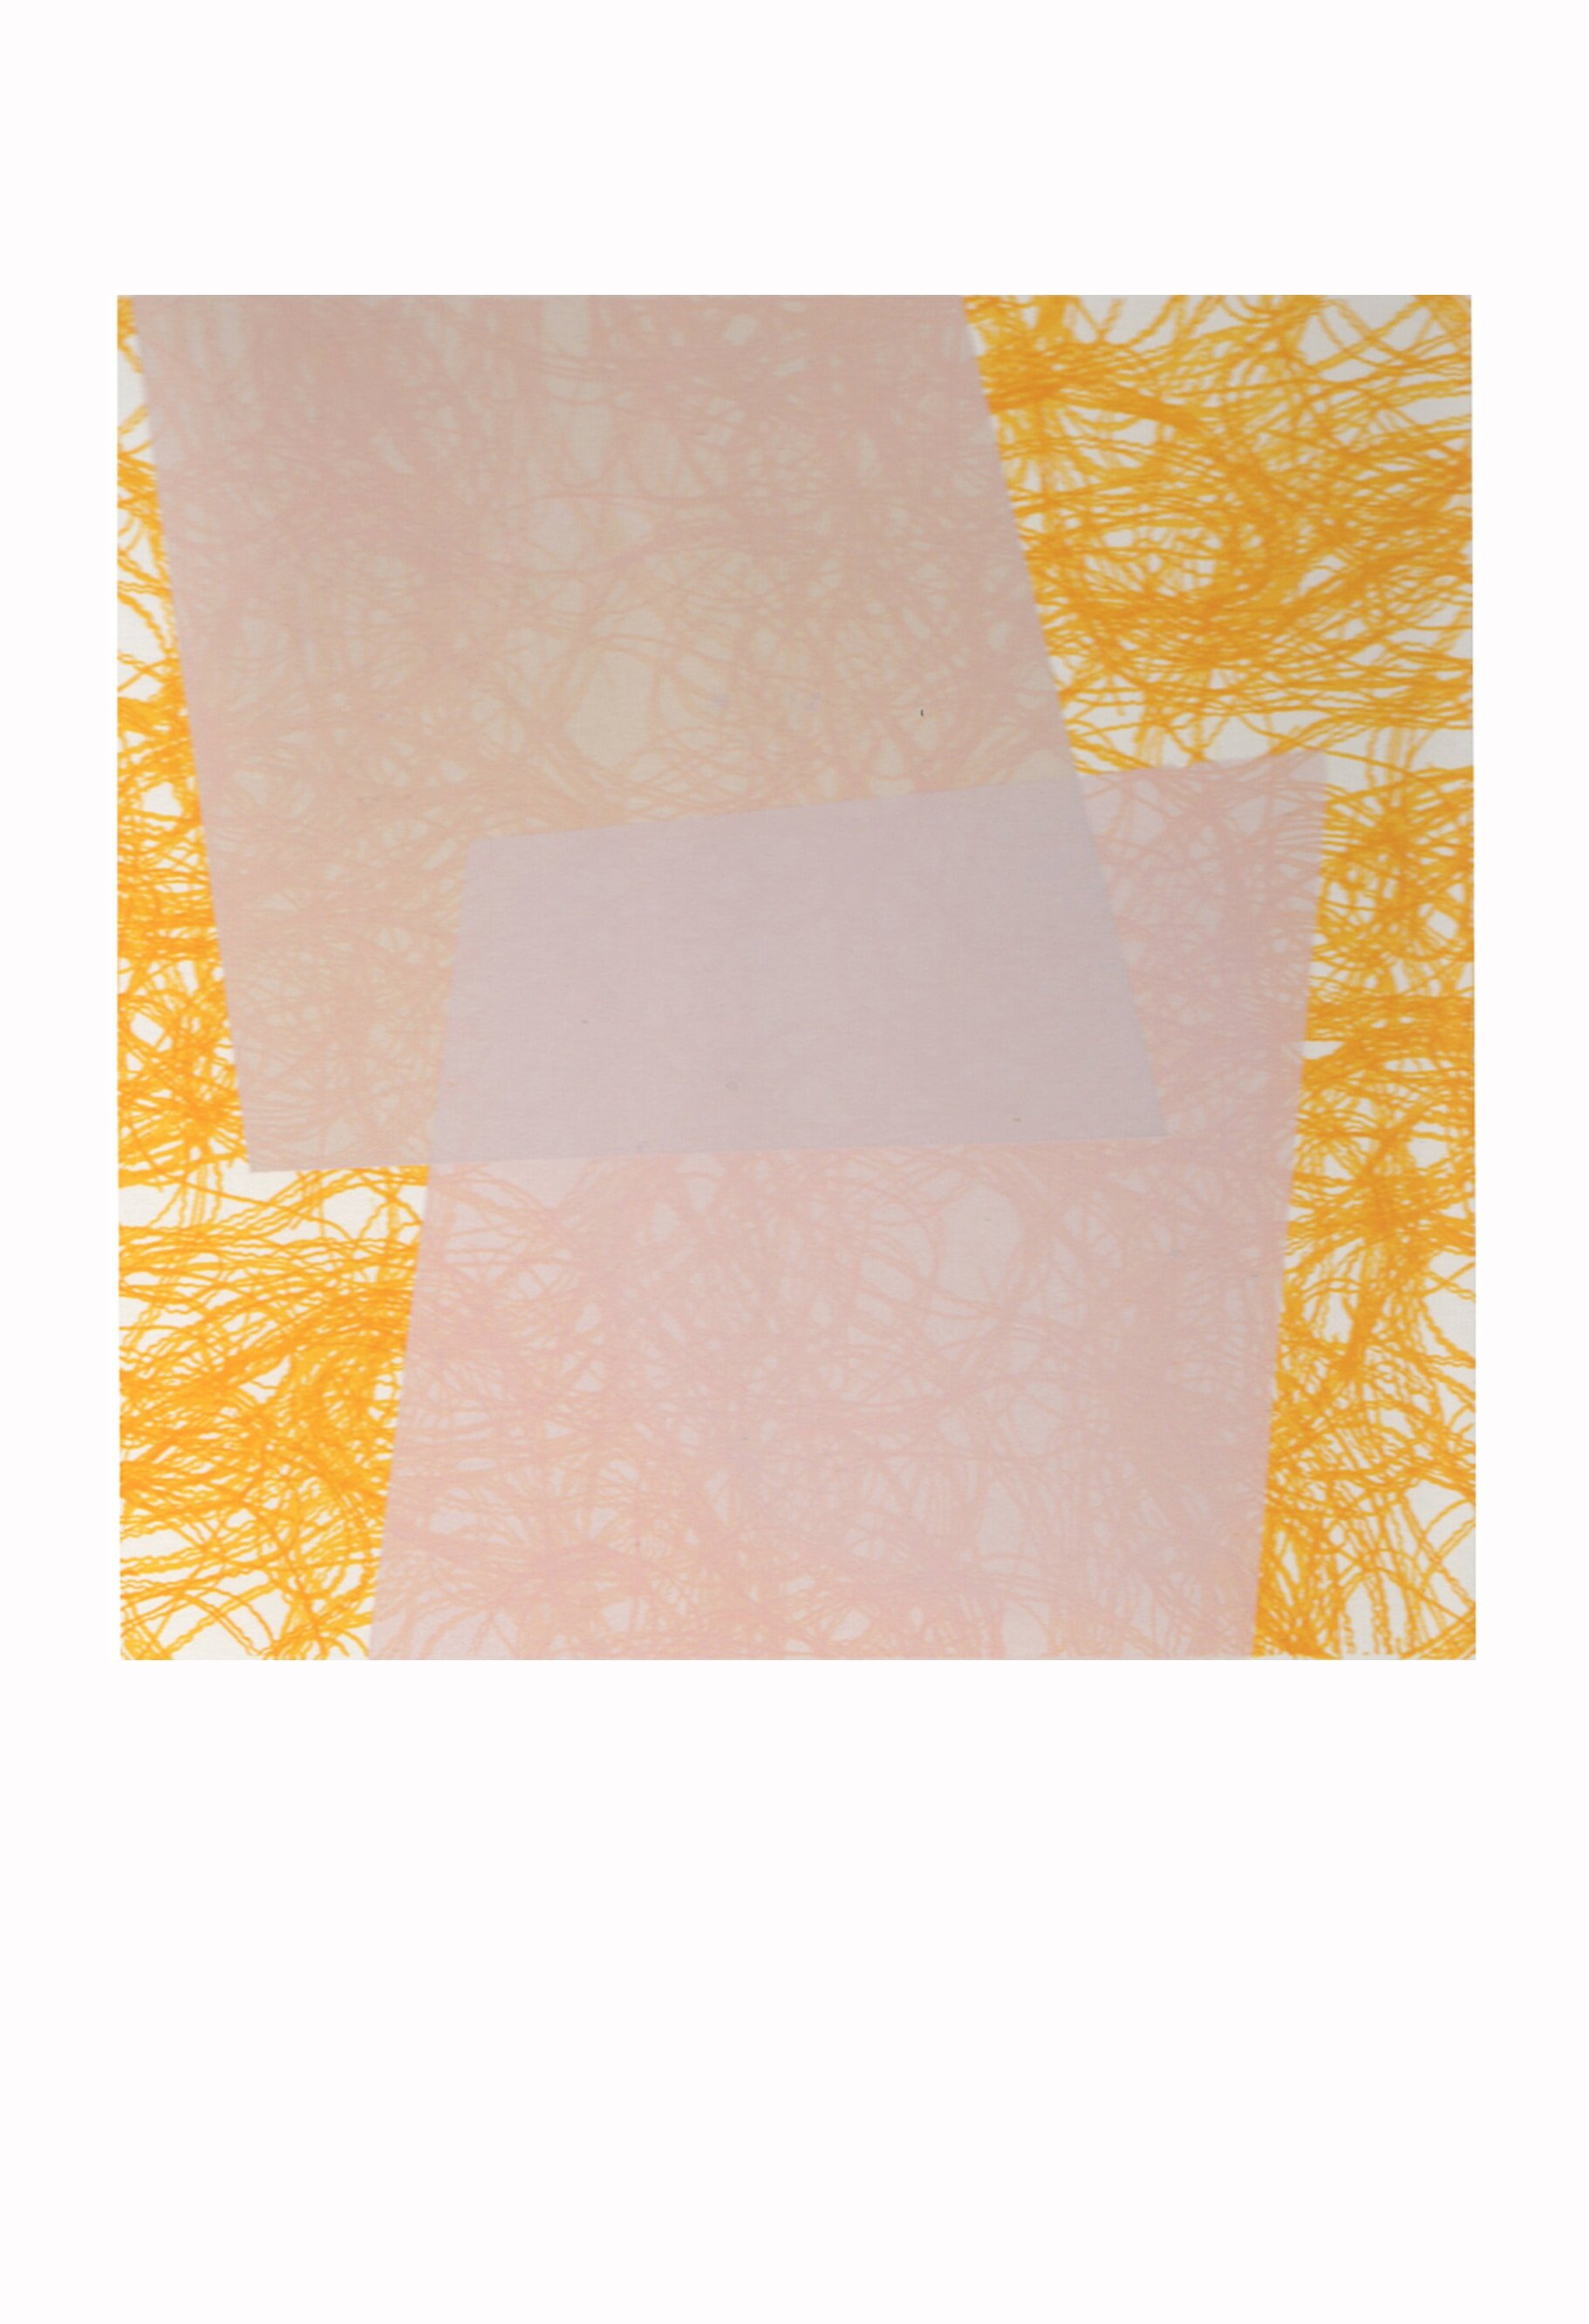   Meshwork Series , screenprint, 32cm x 45cm, 2019 